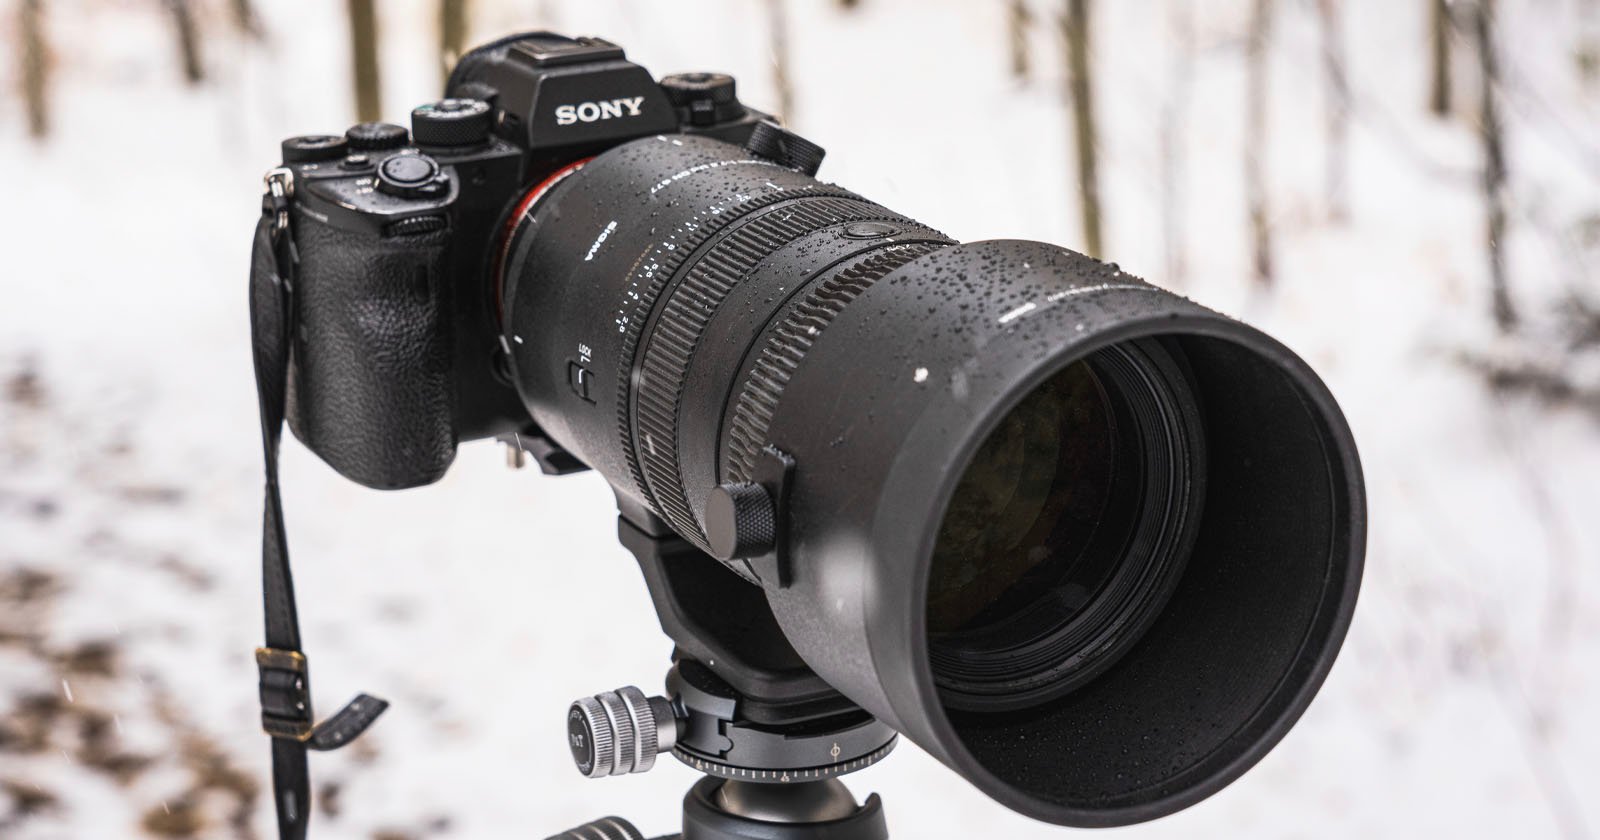 Sigma’s 70-200mm f/2.8 ‘Sports’ Lens Arrives on December 7 for $1,499